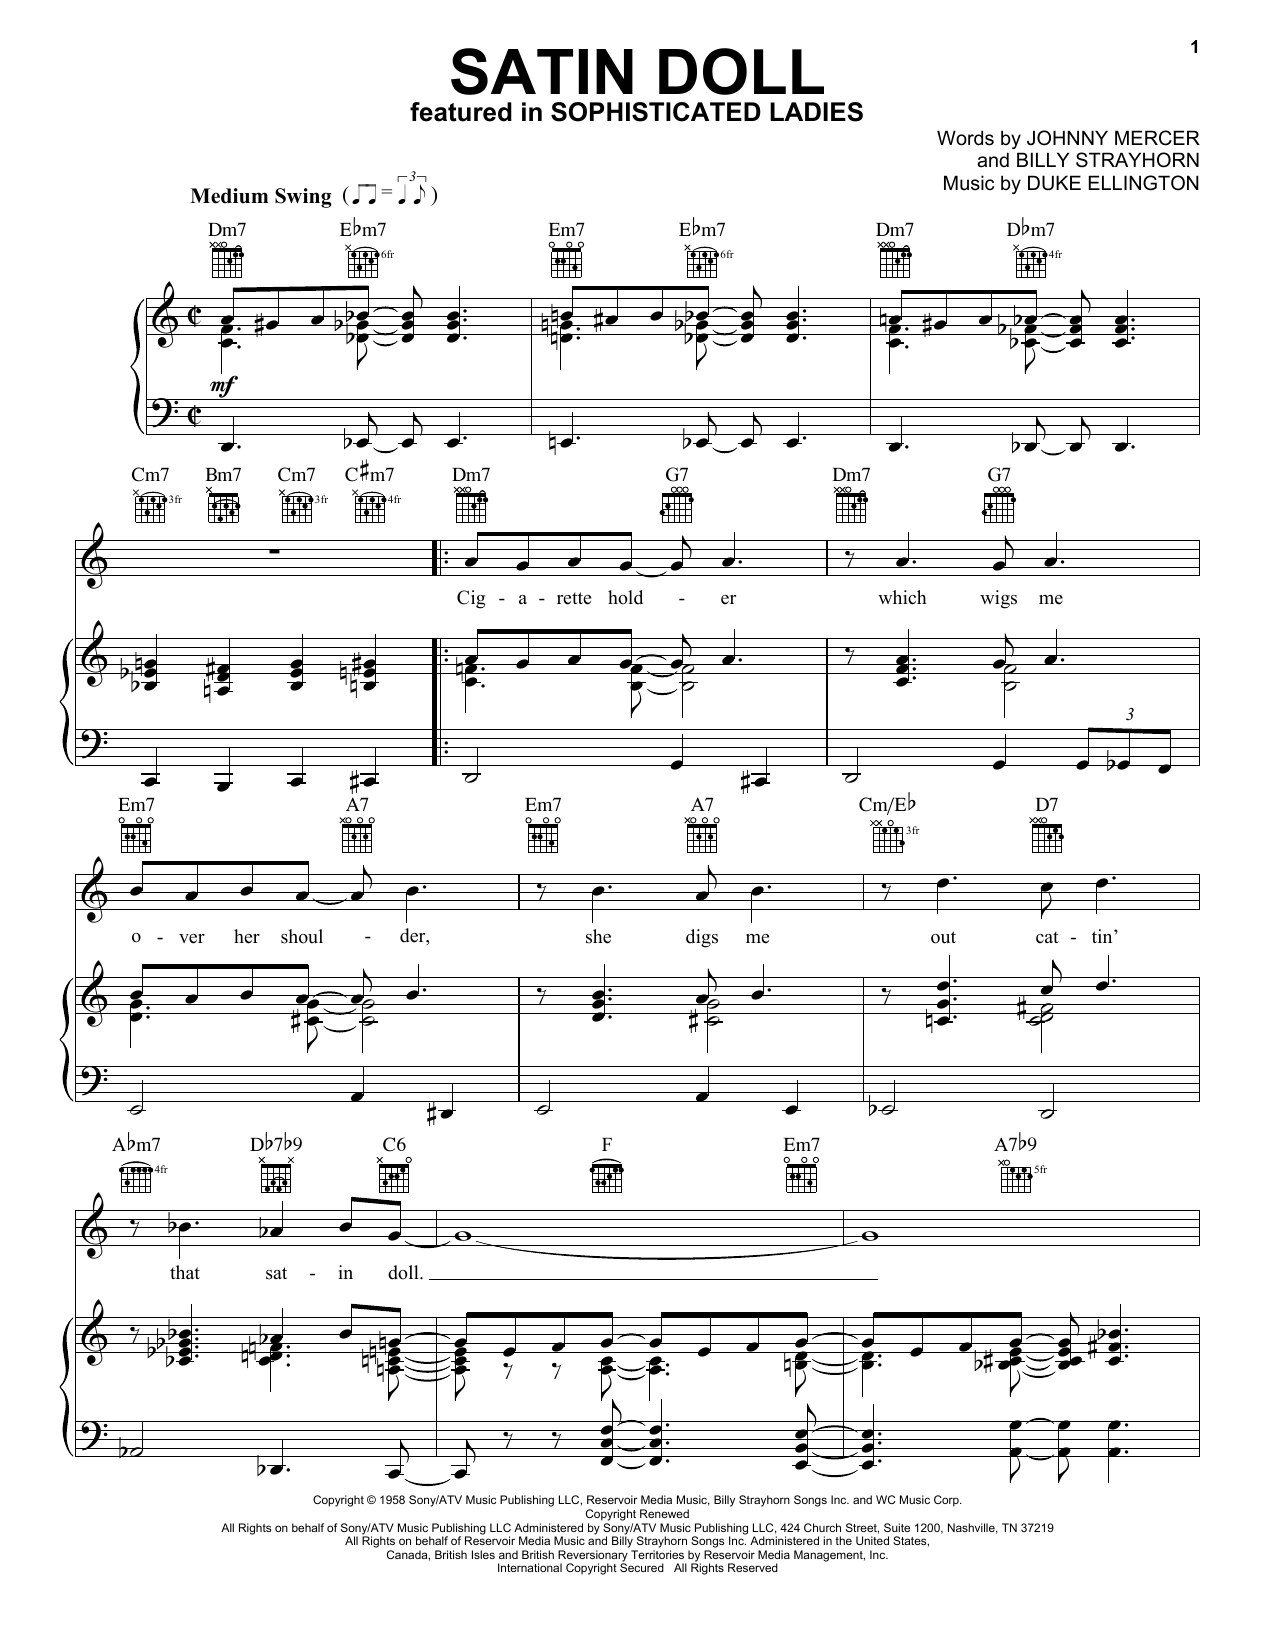 Duke Ellington Satin Doll Sheet Music Notes & Chords for Guitar Tab - Download or Print PDF